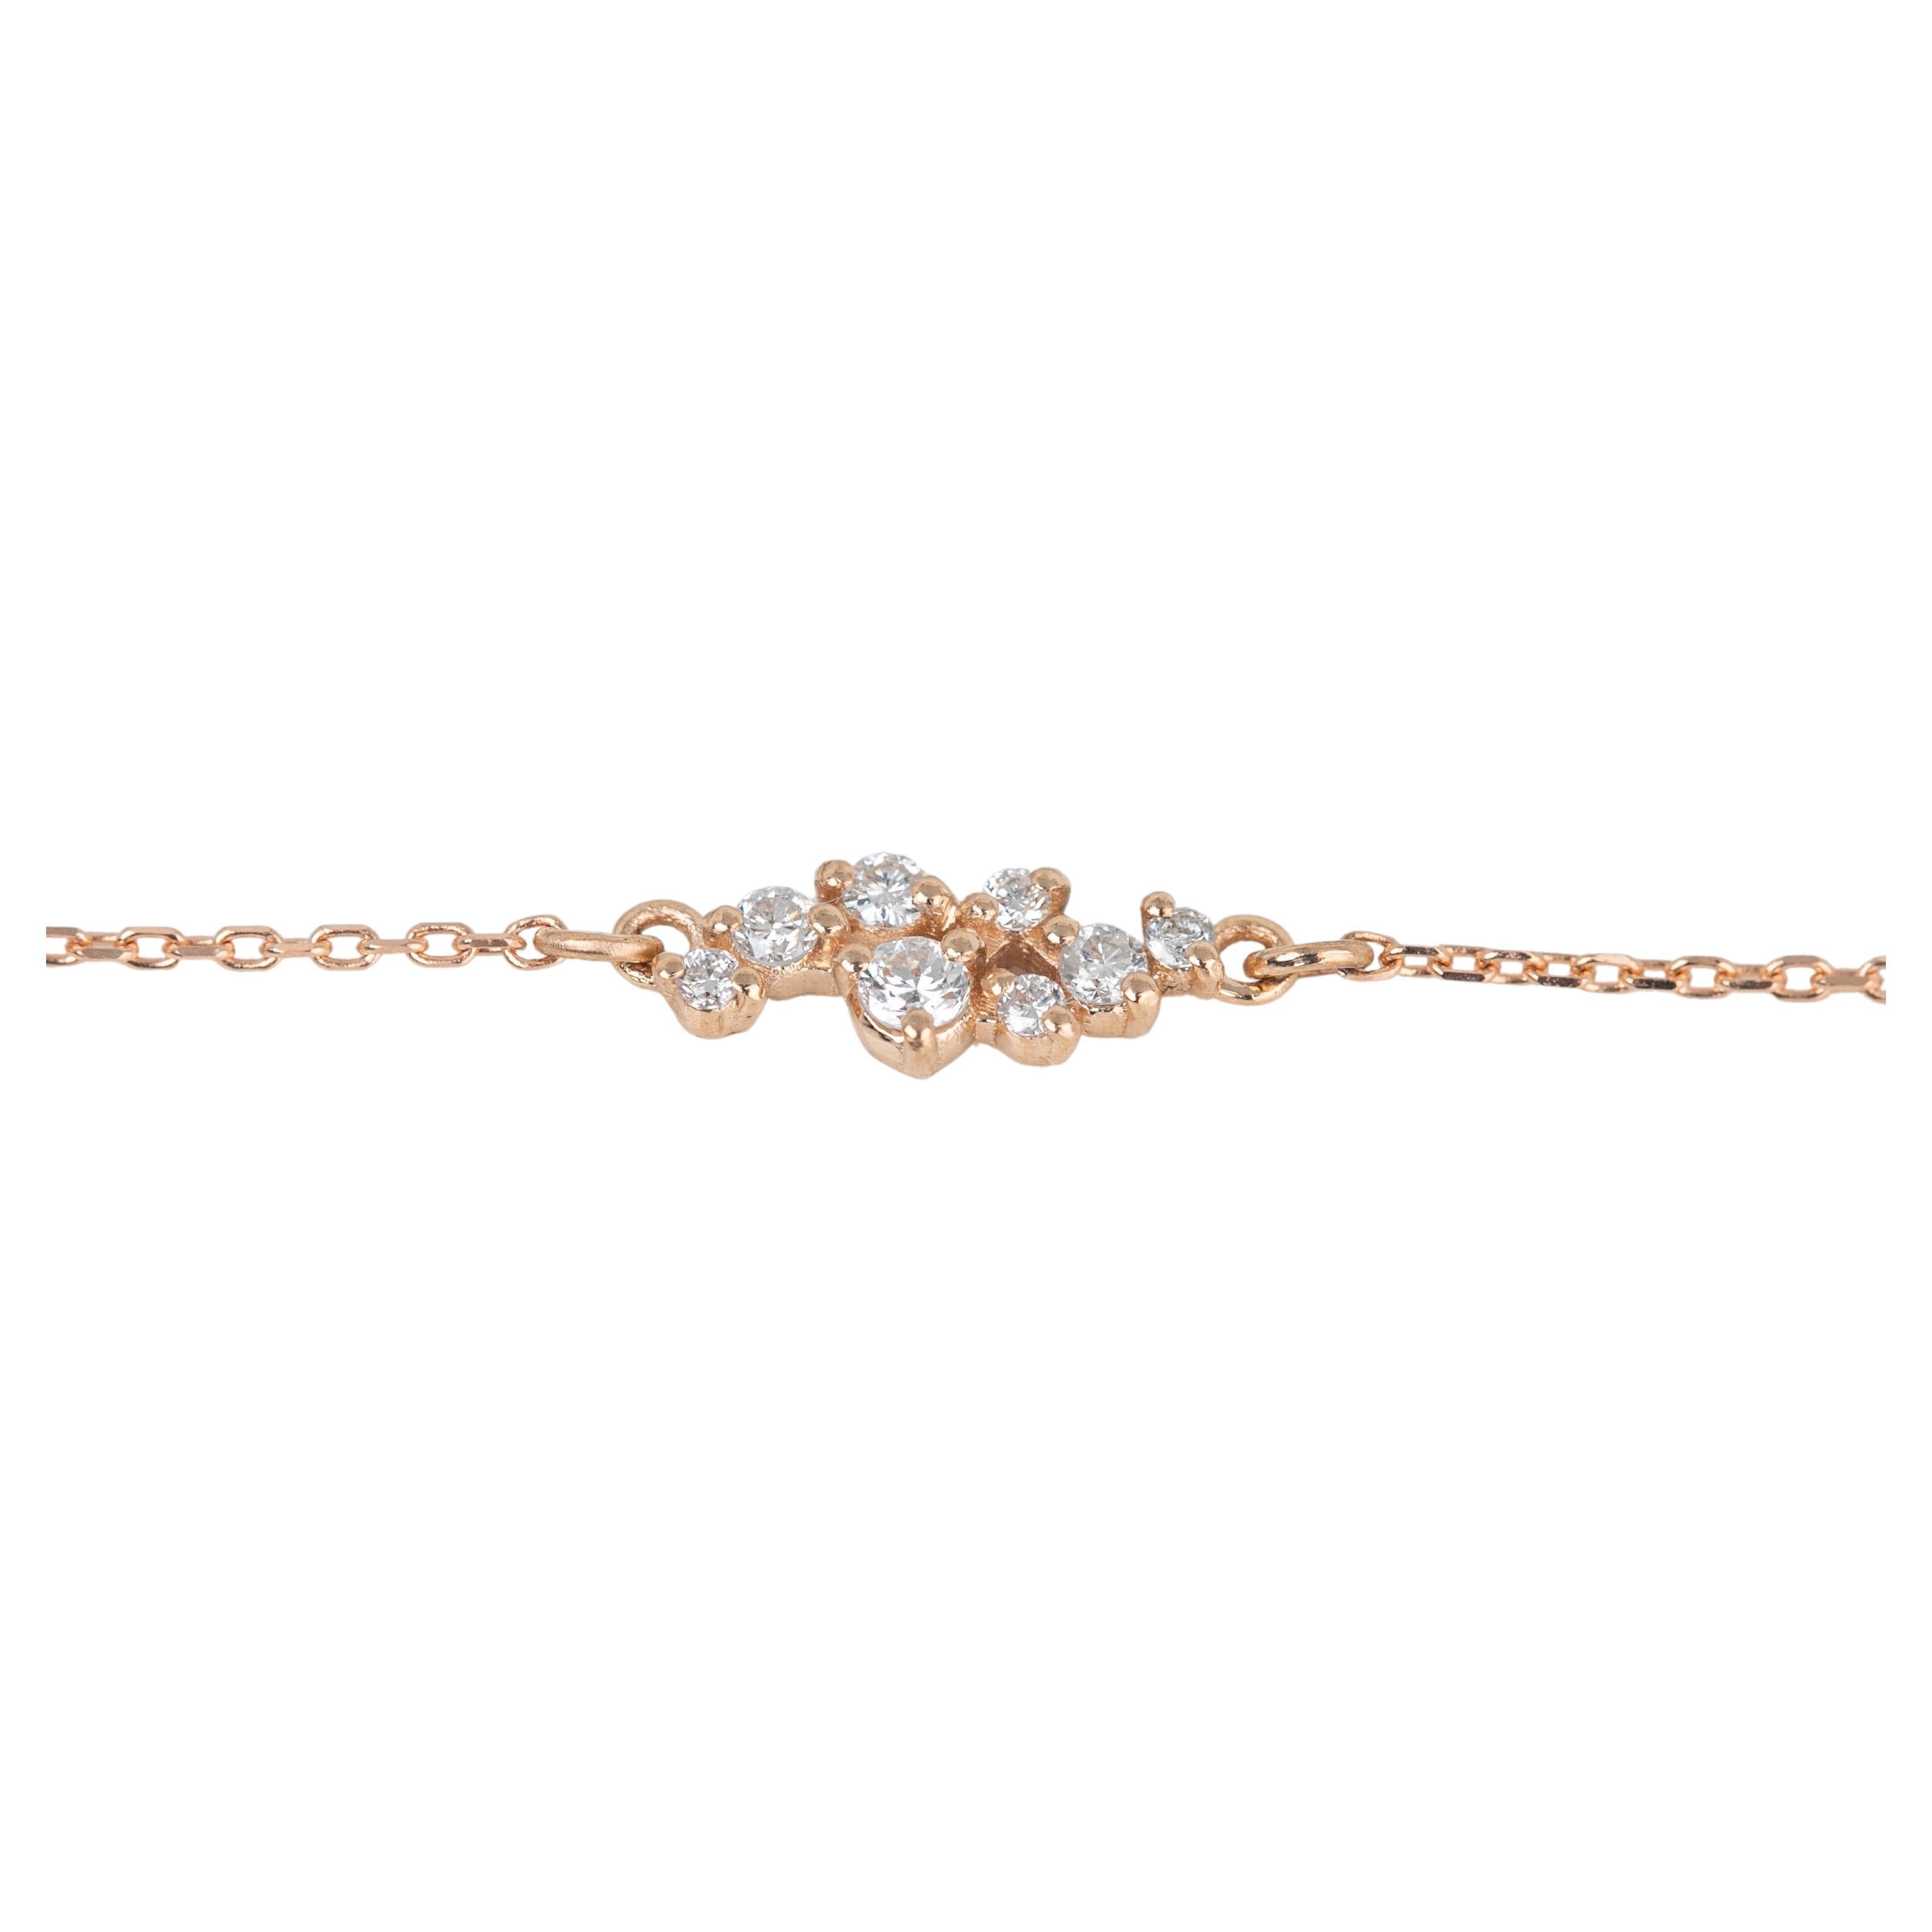 Bracelet tennis en or 14 carats et diamants Milky Way, bracelet en or 14 carats 